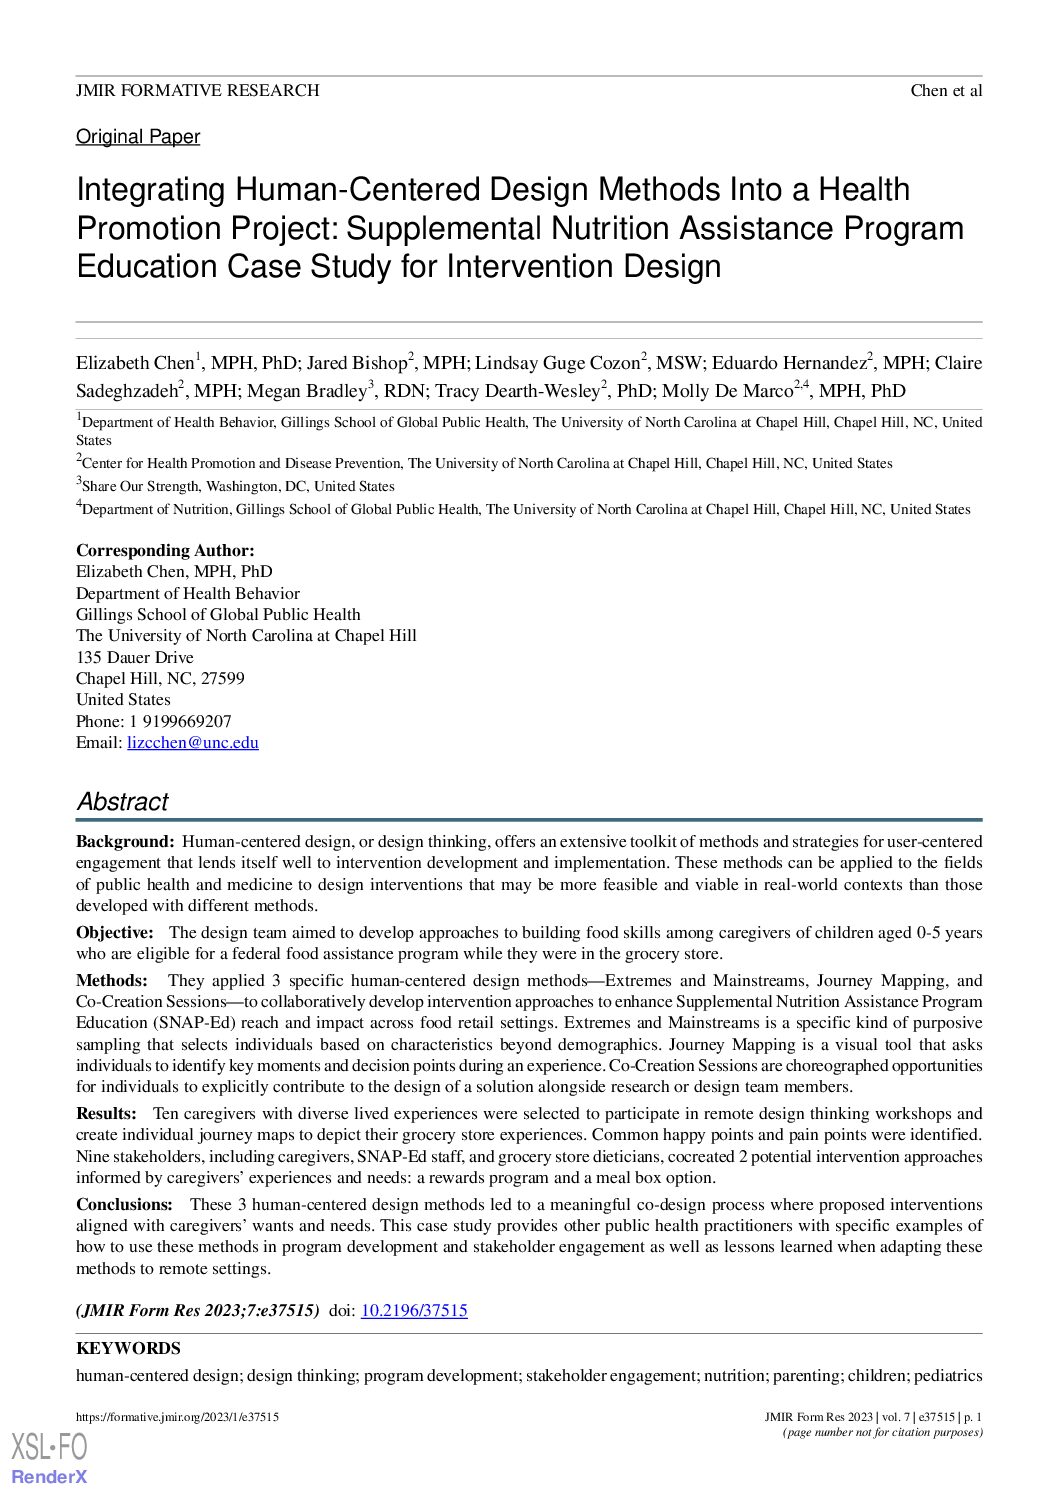 Integrating Human-Centered Design Methods Into a Health Promotion Project: Supplemental Nutrition Assistance Program Education Case Study for Intervention Design